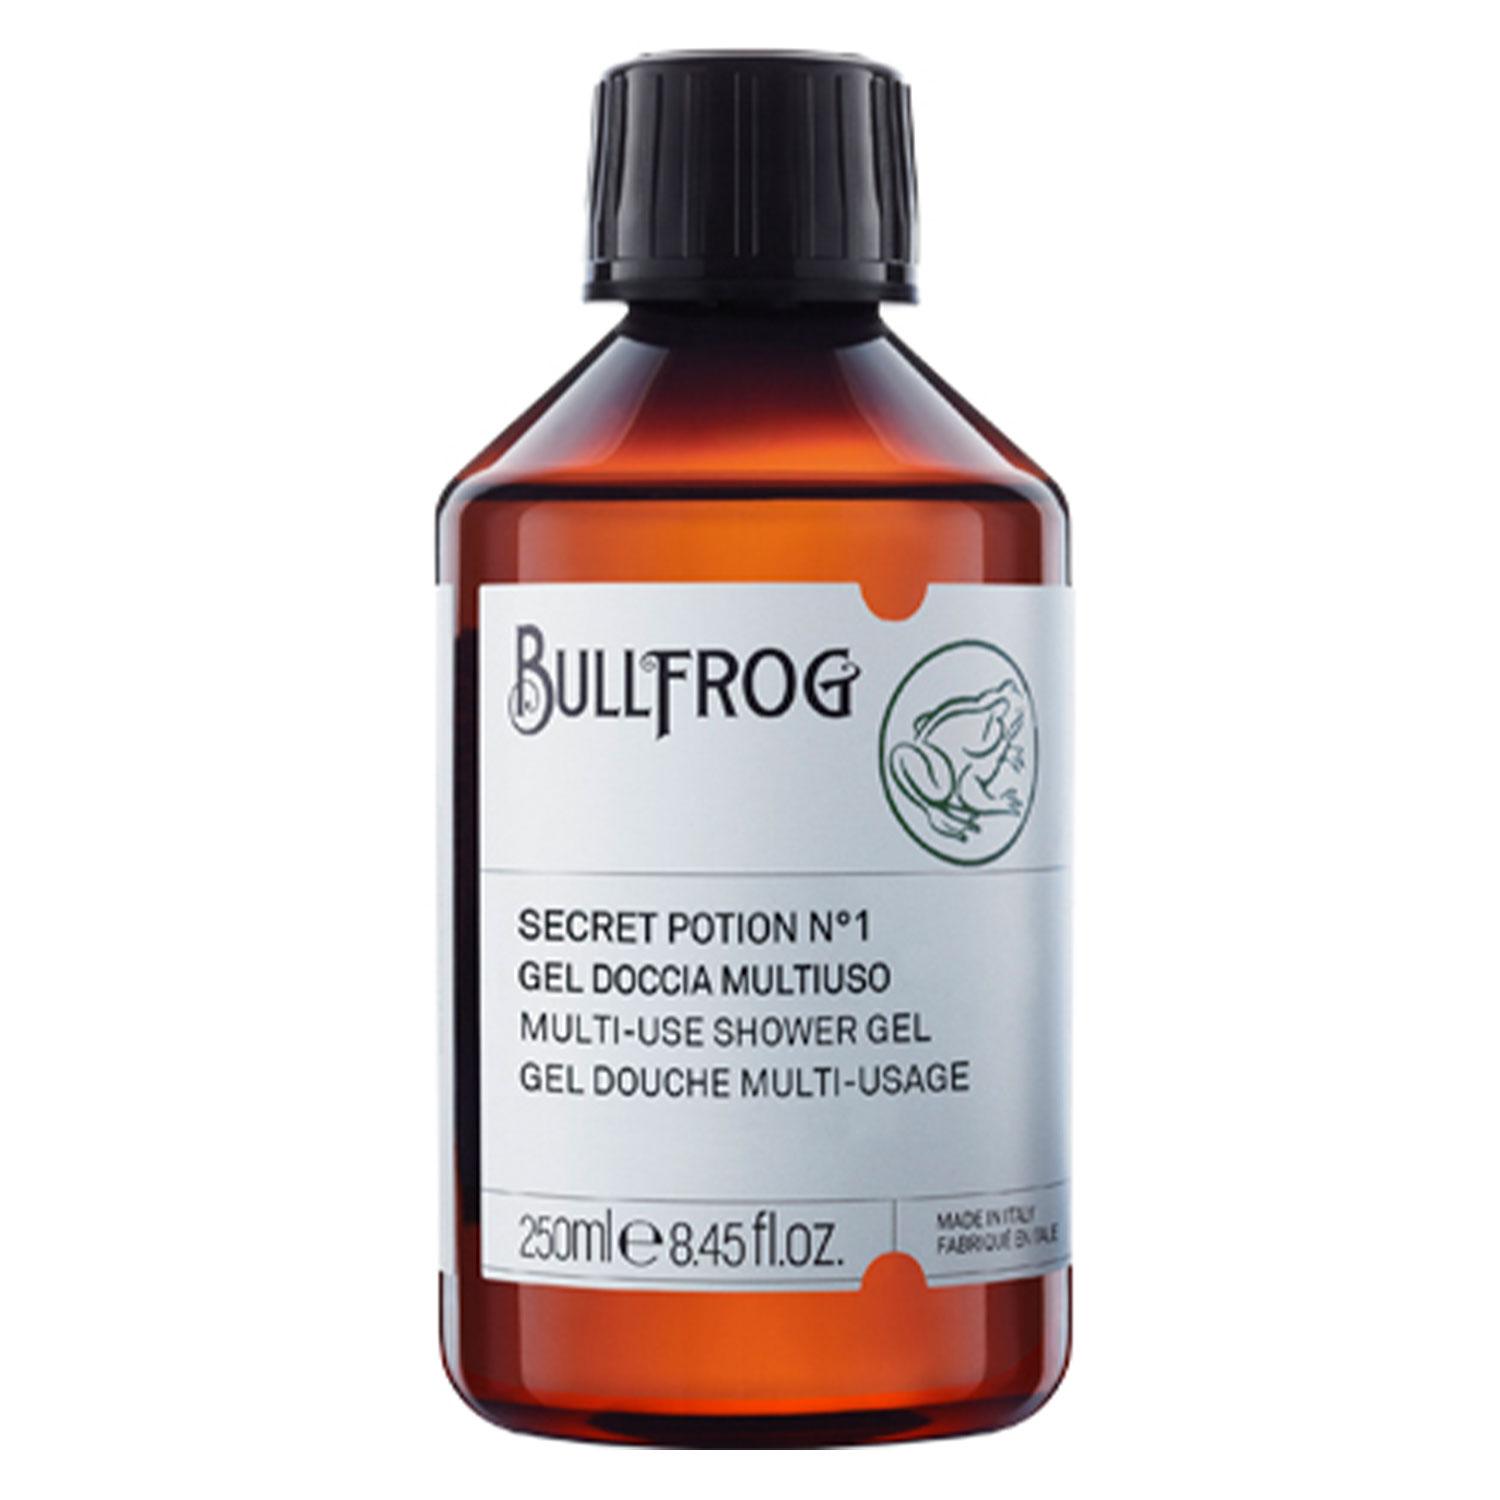 BULLFROG - Multi-Use Shower Gel Secret Potion N°1